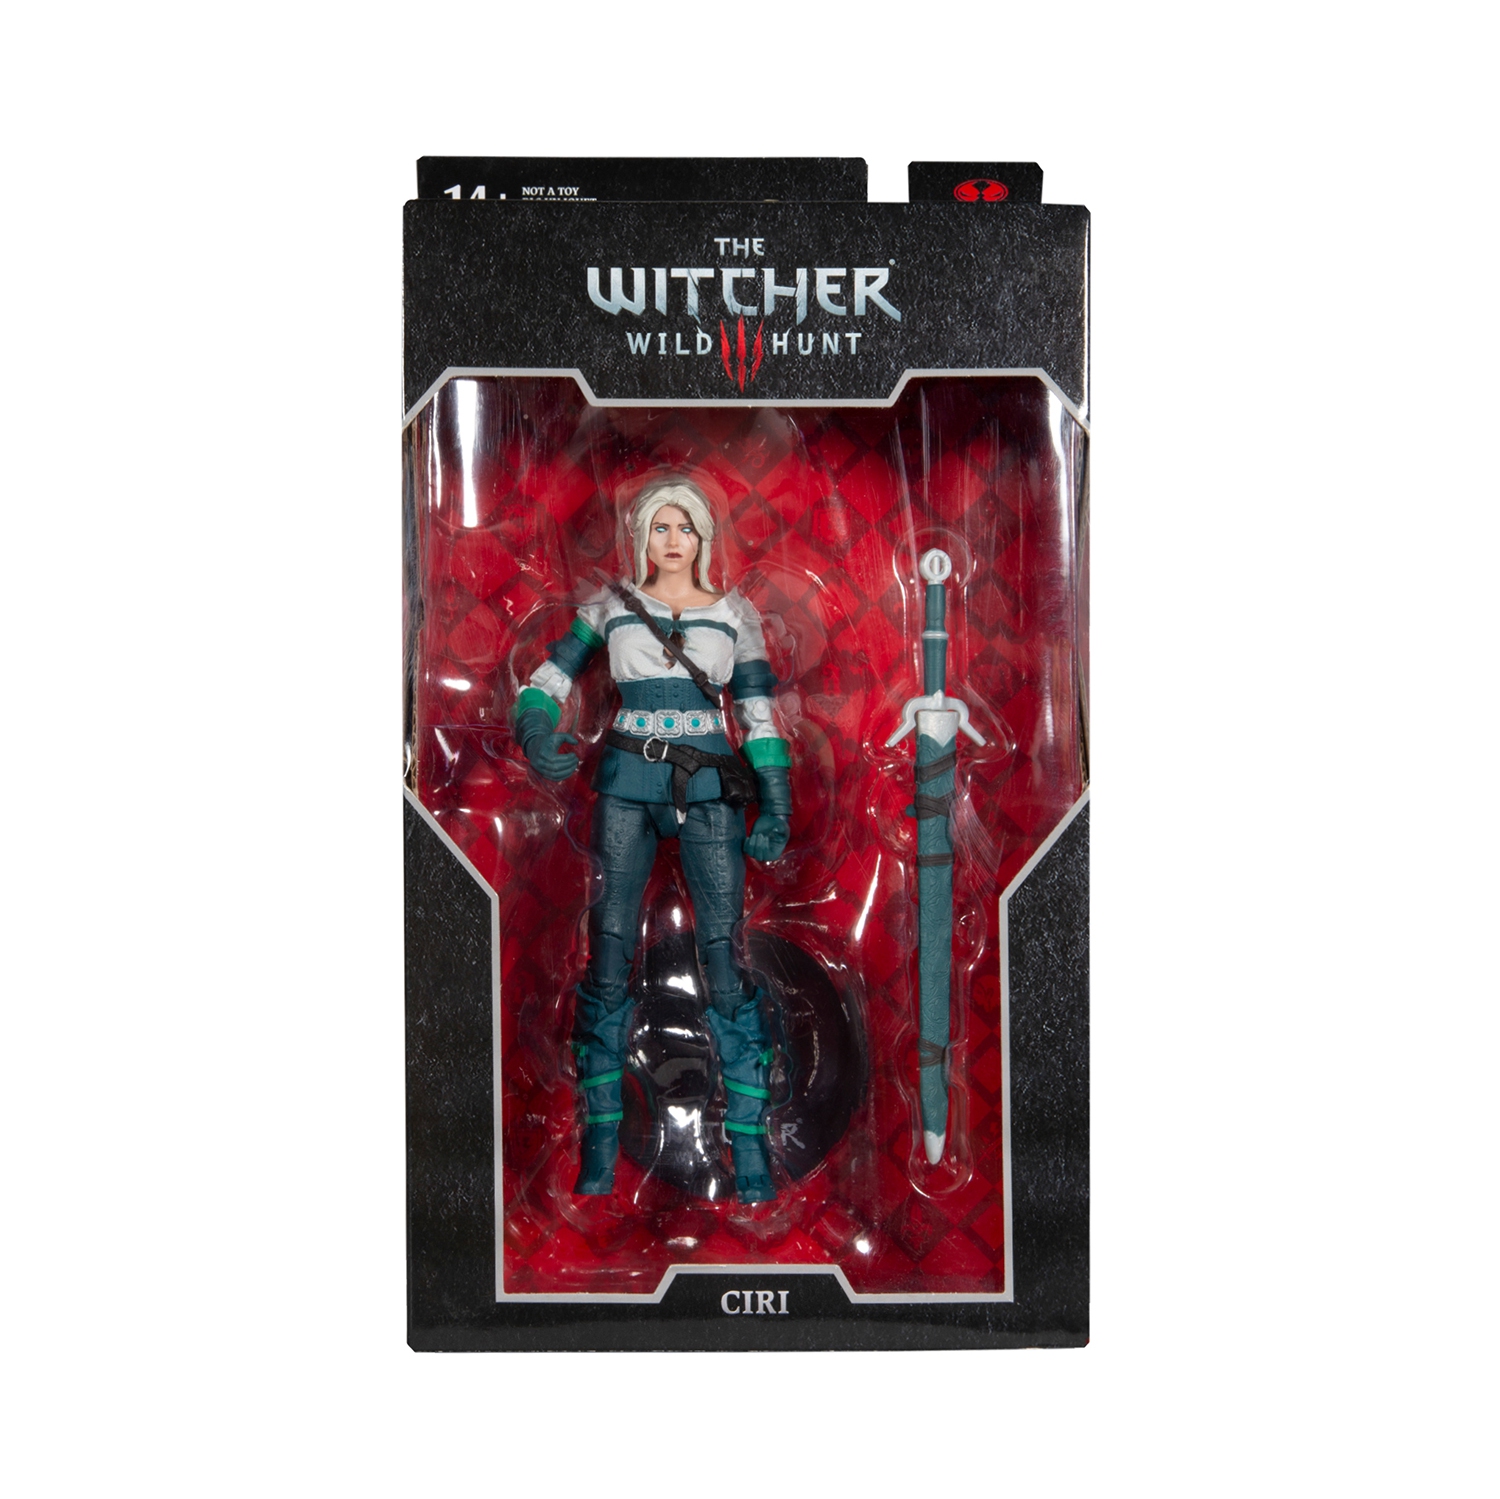 The Witcher Wild Hunt III 7 Inch Action Figure Wave 3 - Ciri (Elder Blood)